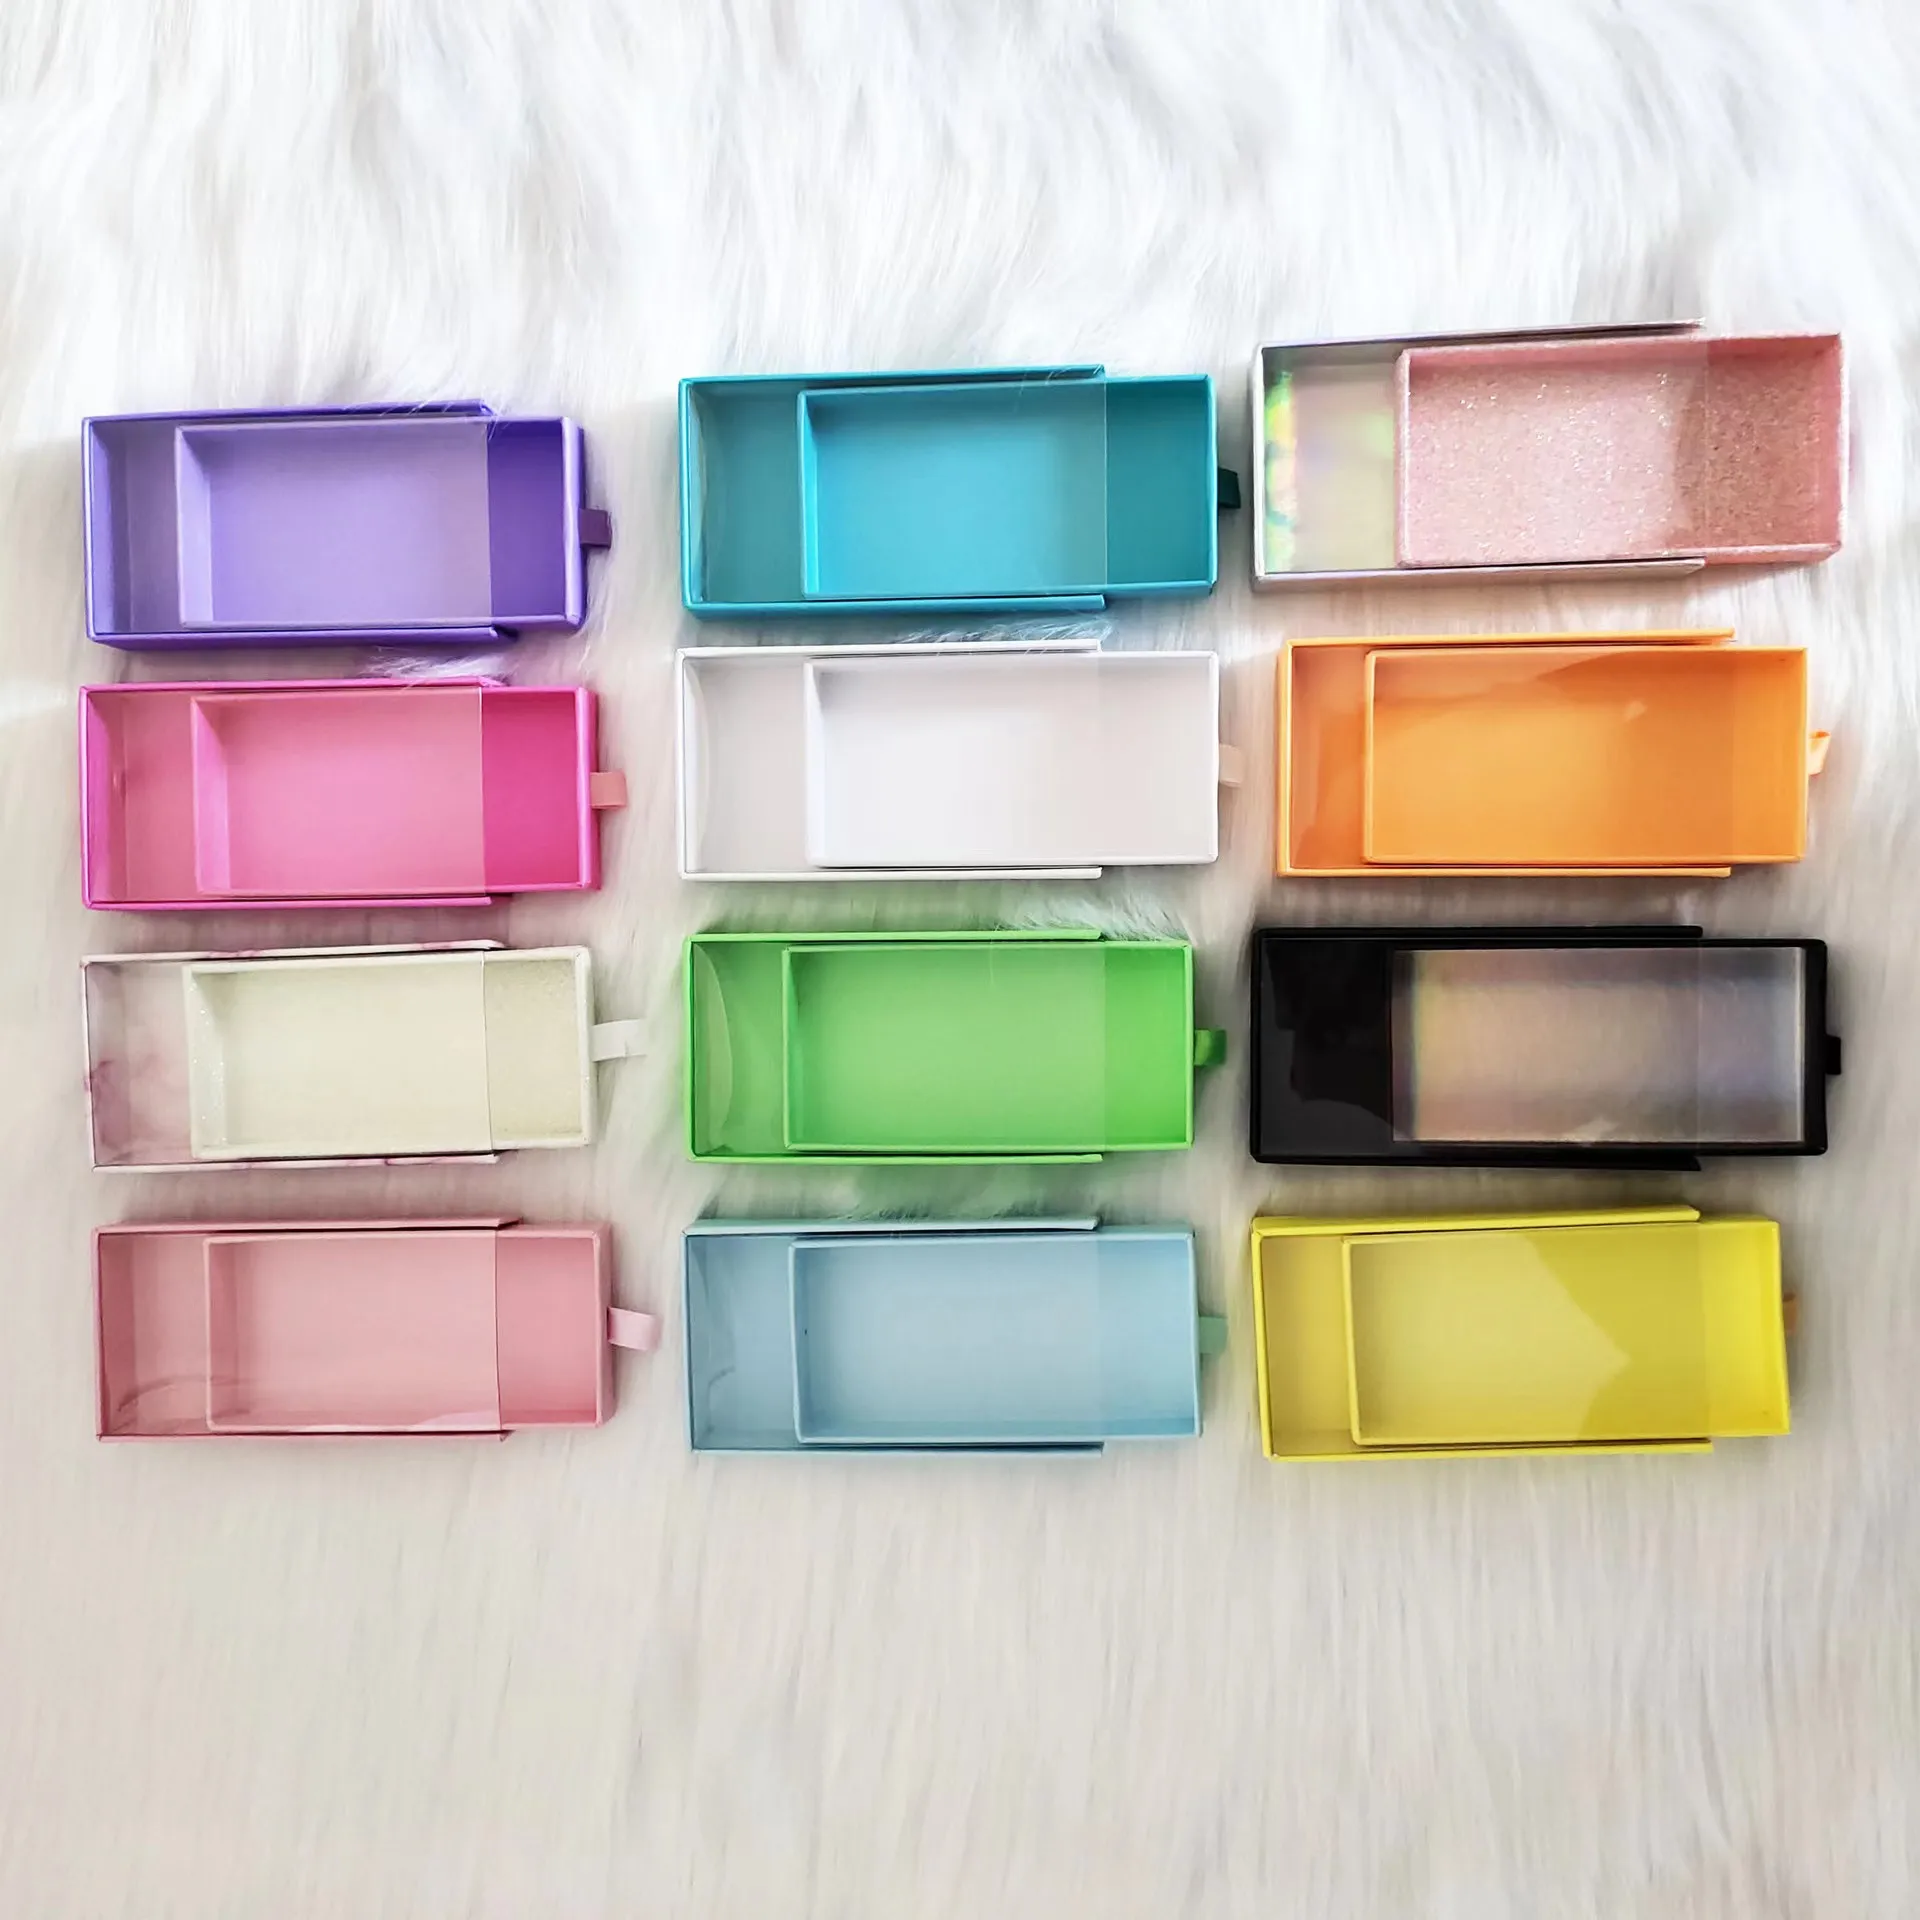 

Wholesale Eyelash Packaging Box Lash Boxes Package 25mm Mink Lashes Storage Case With Tray Makeup Bulk Vendor